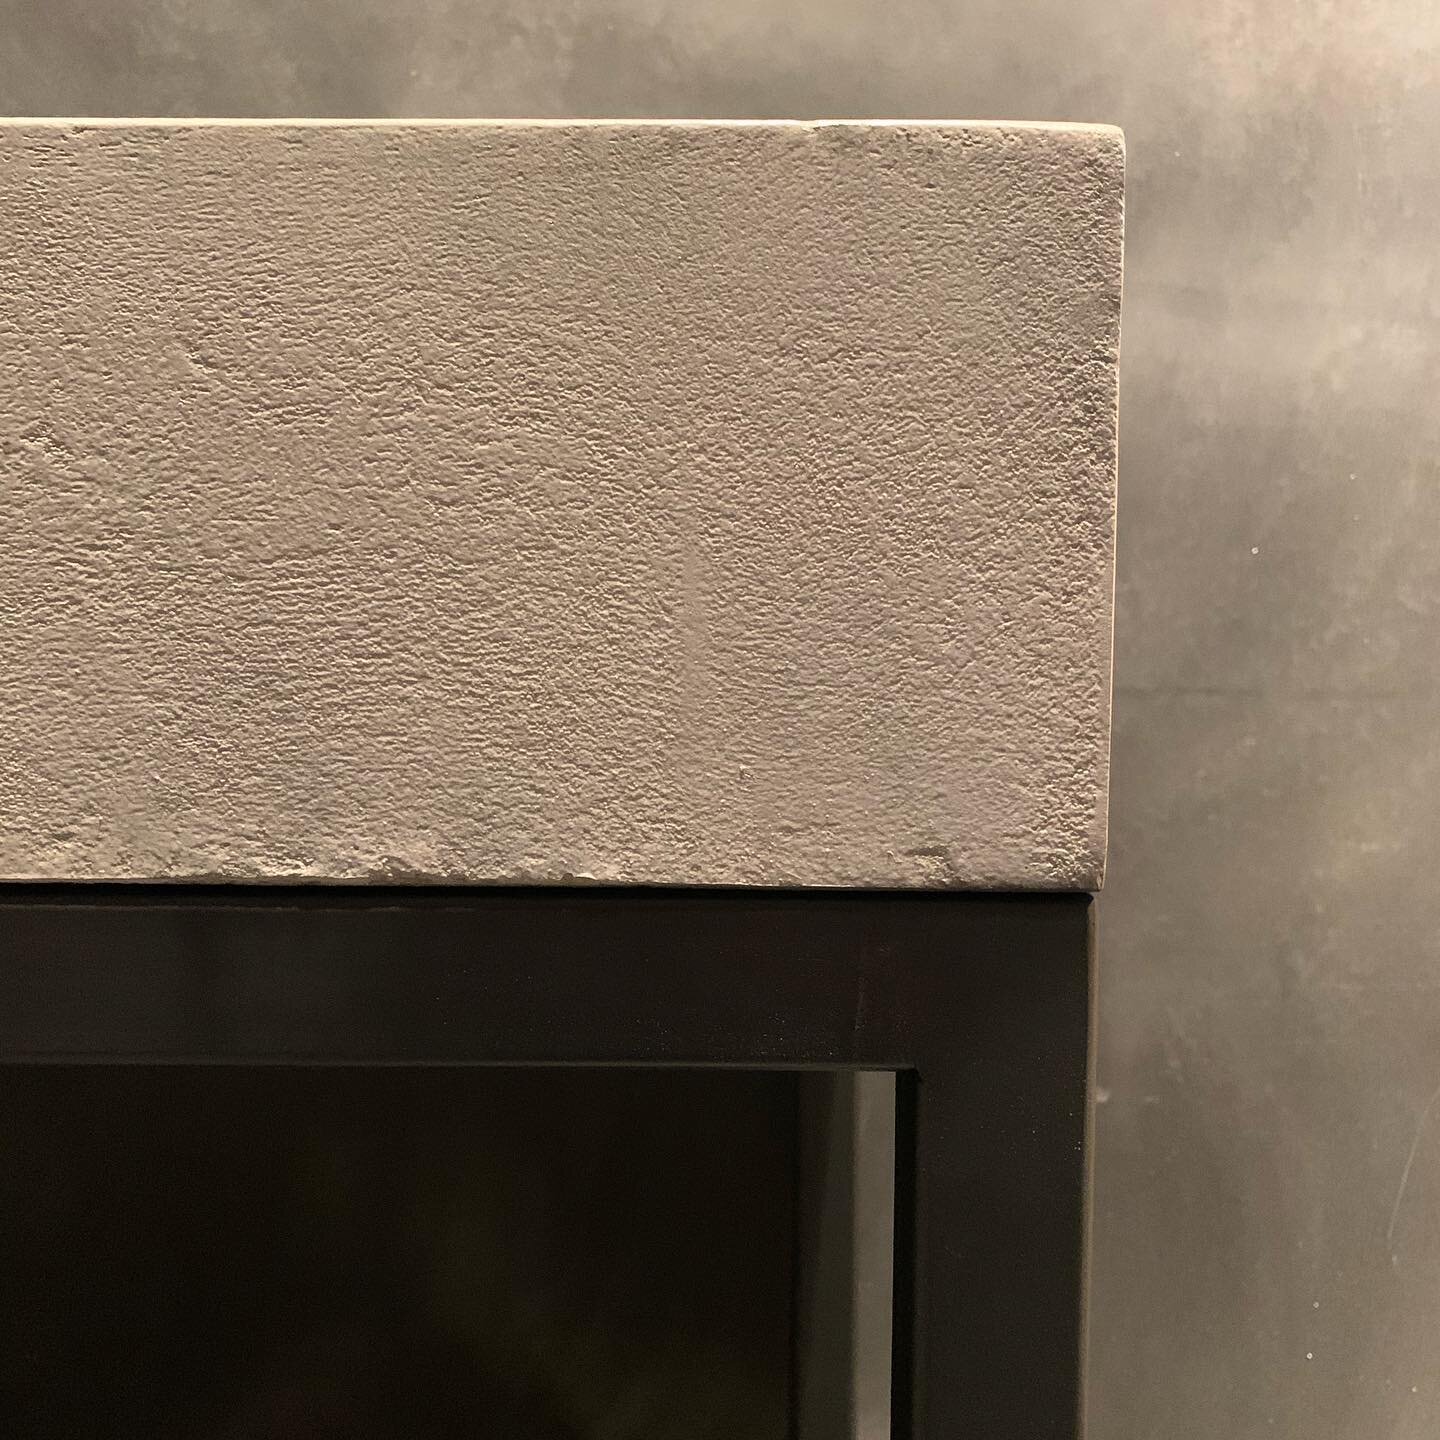 Hand Troweled Gray Concrete Sink #custom #handtroweled #concretesink #troughsink #farmsink #modernsink #concretevanity #concreteandsteel #concretebasin #modernfarmhouse #bathroomdesign #concretedesign #stogsconcretedesign